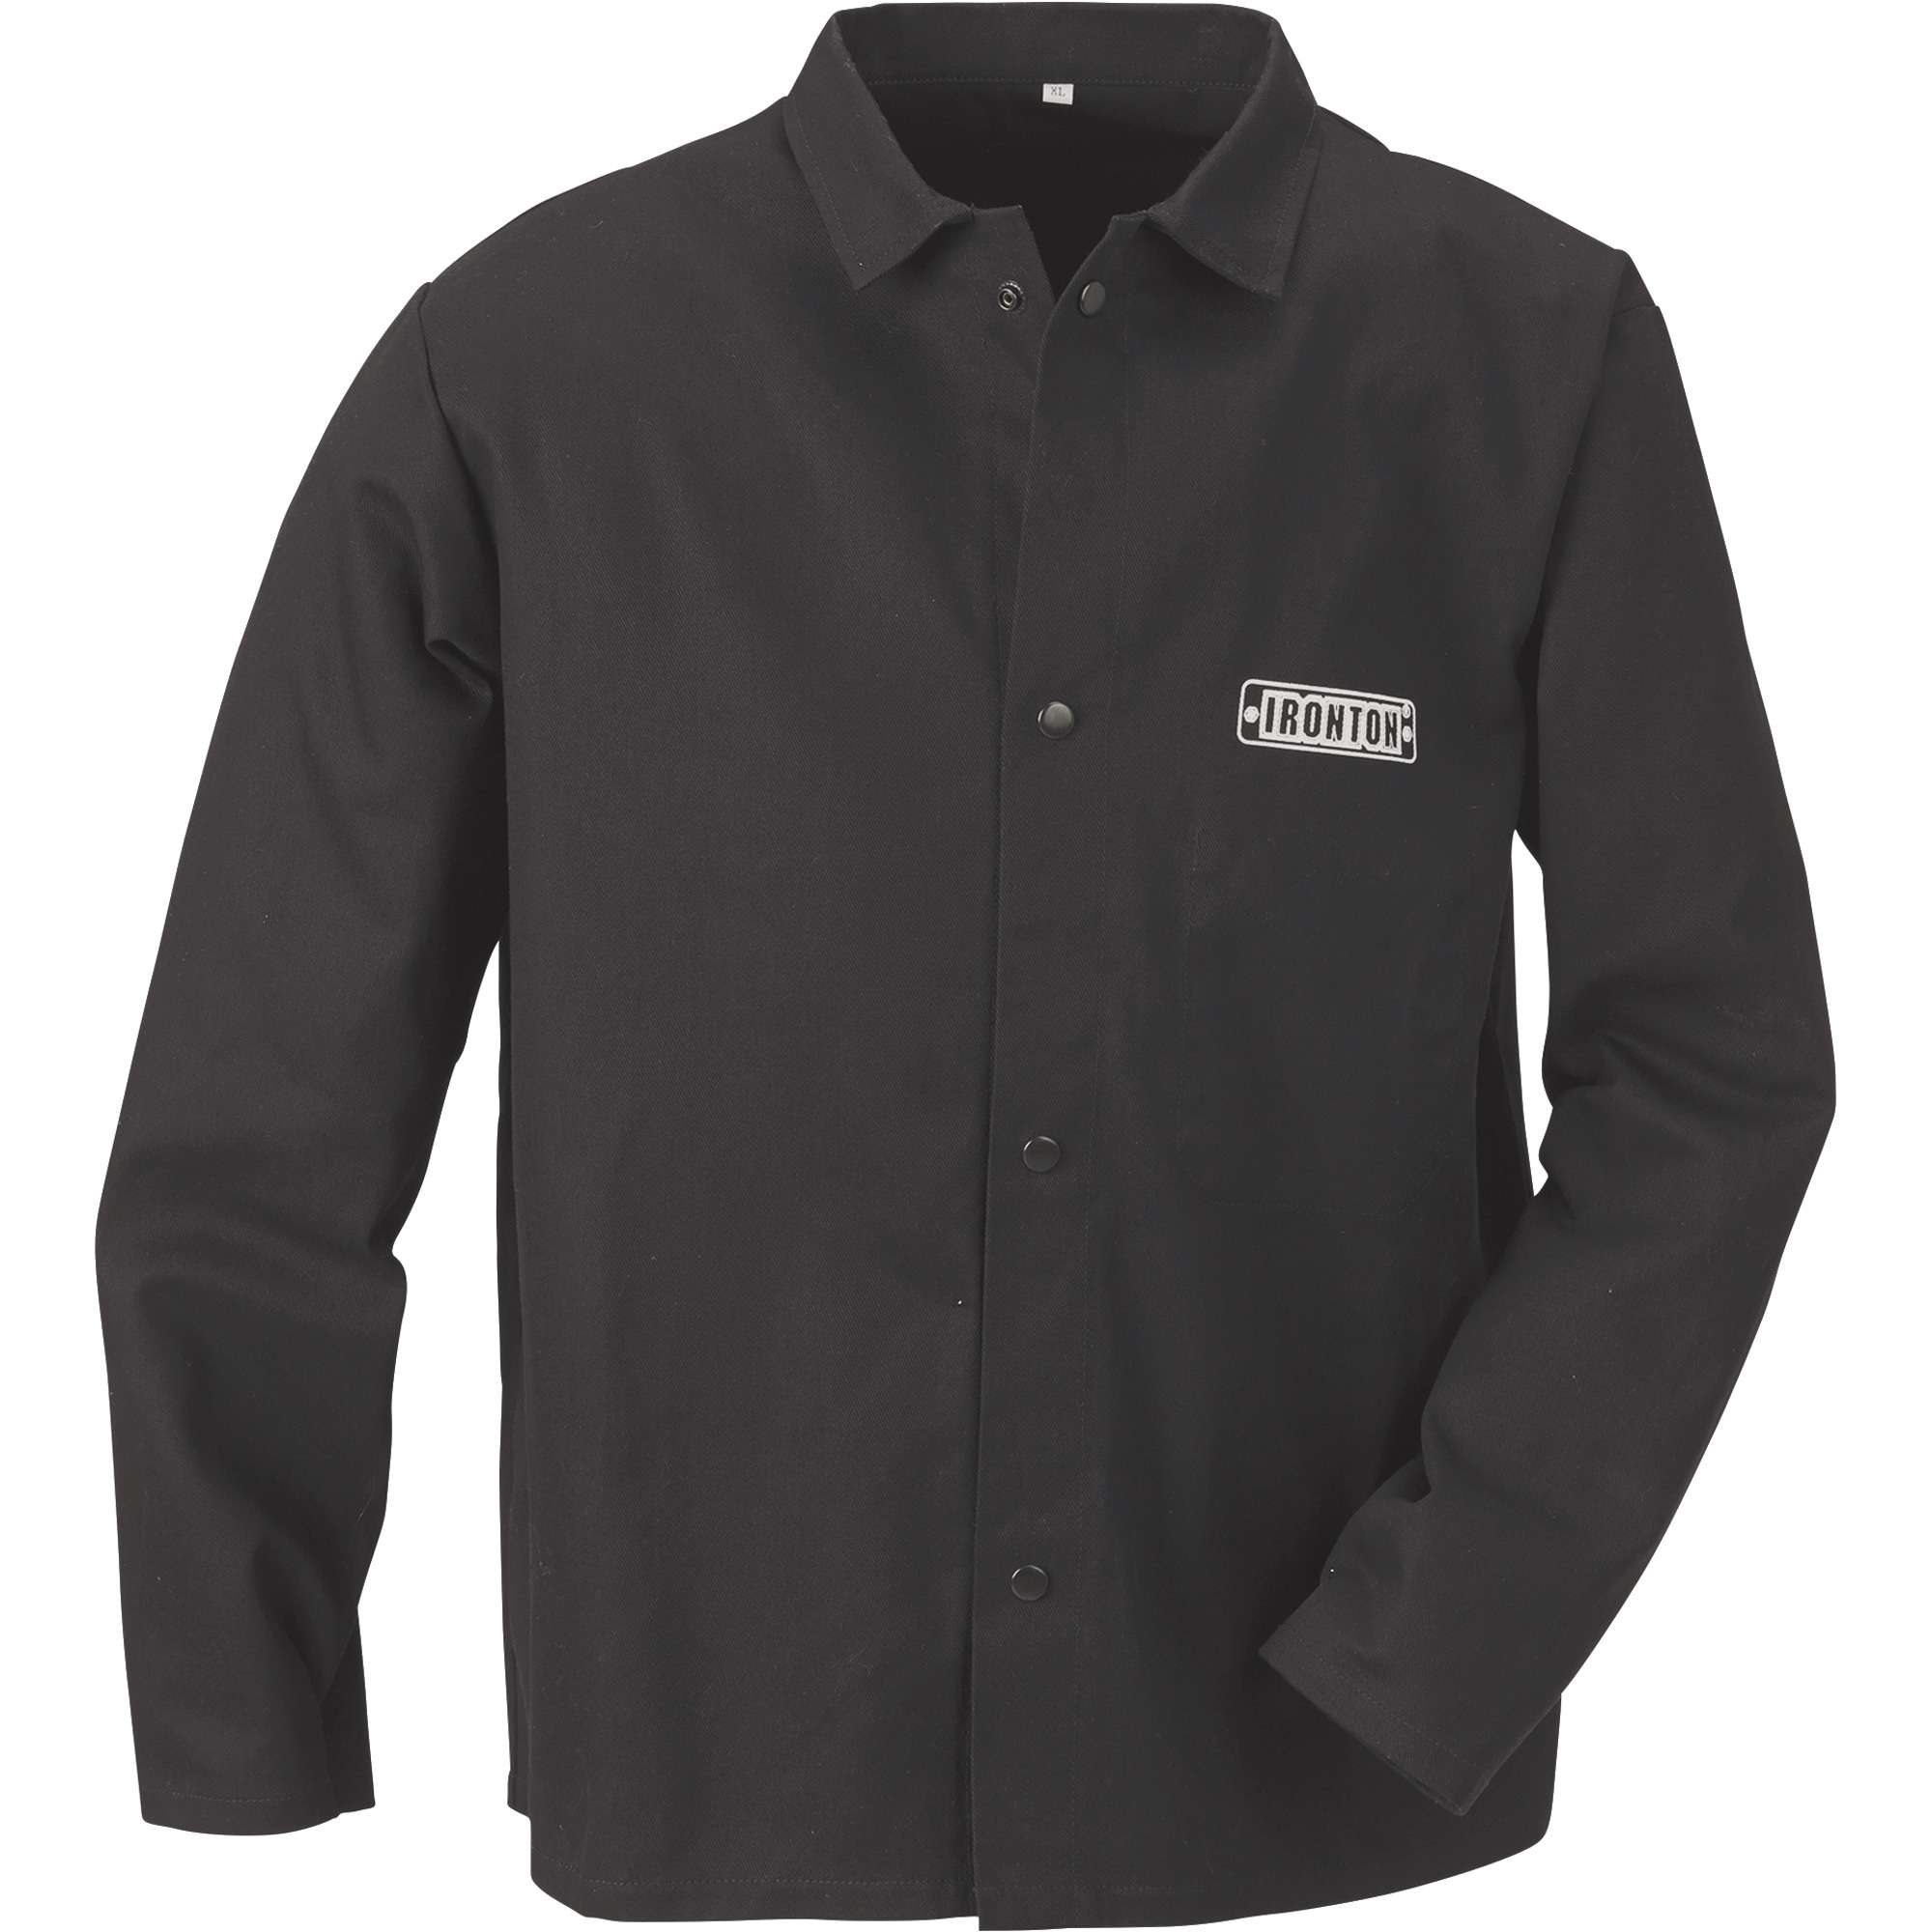 Ironton Flame-Resistant Welding Jacket â Large, Black